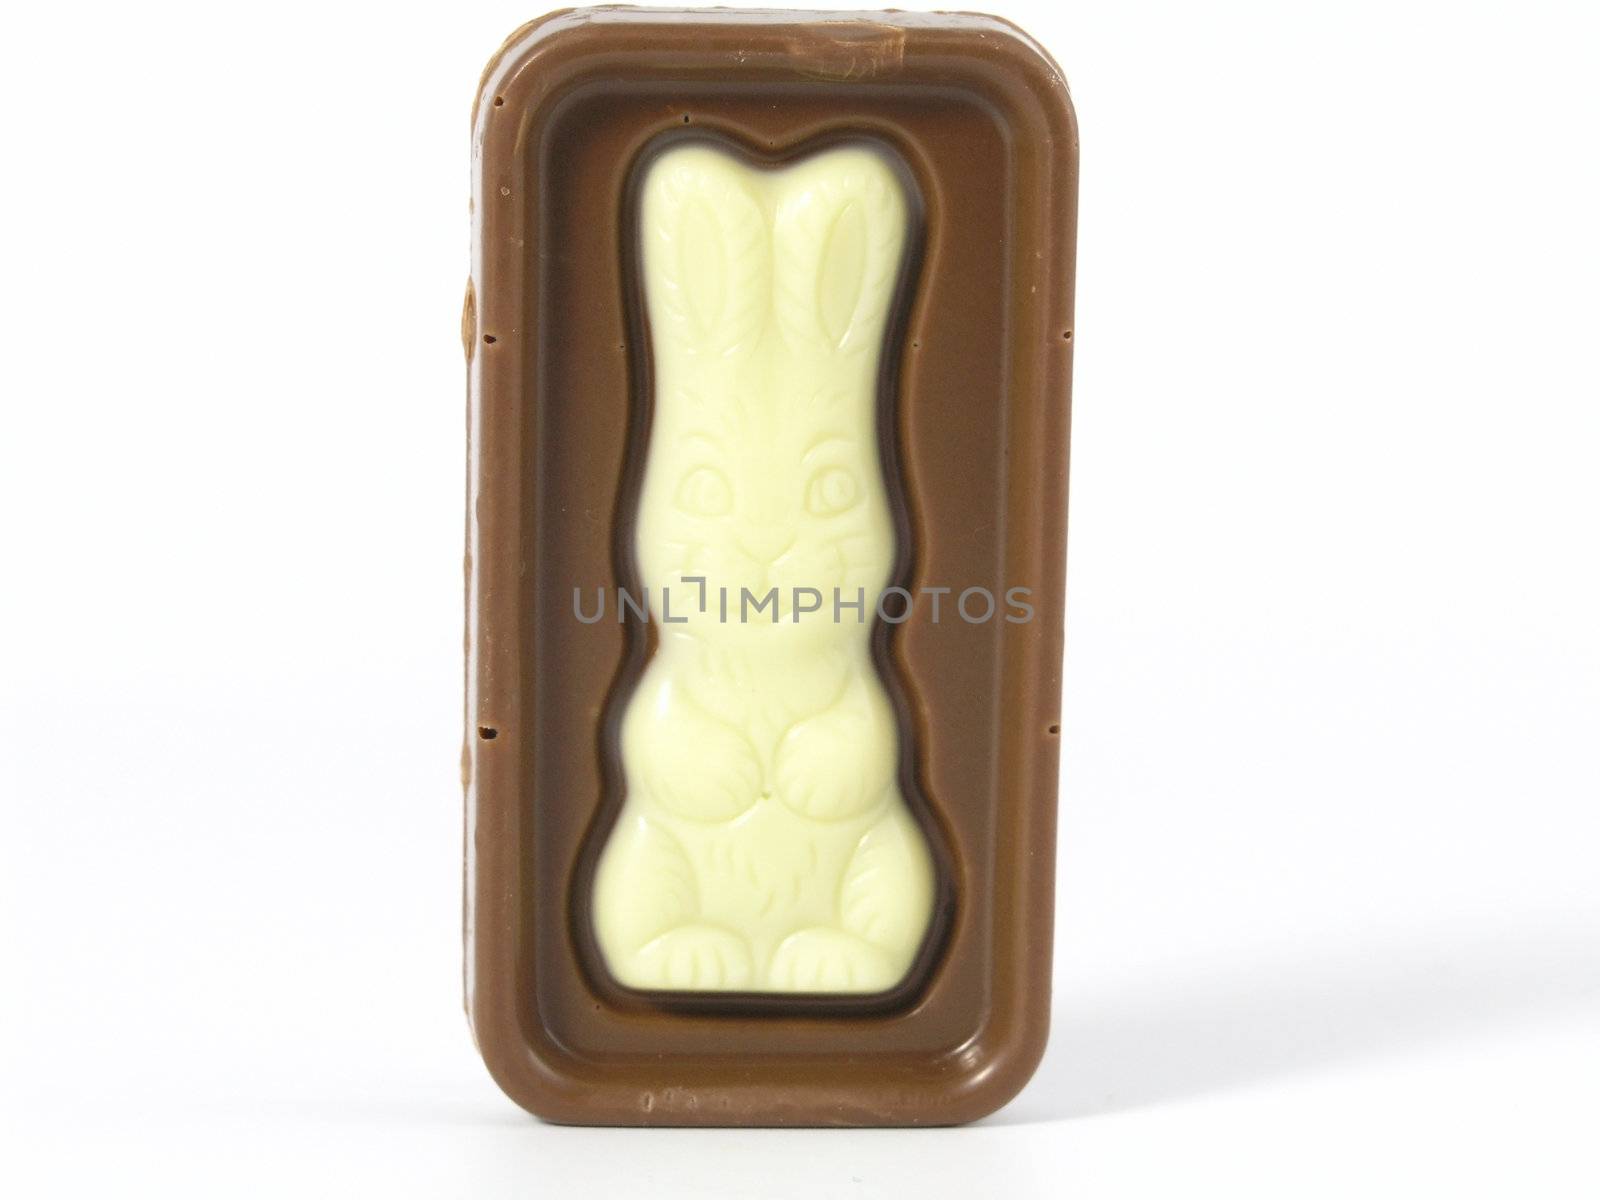 Chocolate Easter Bunny by iwka